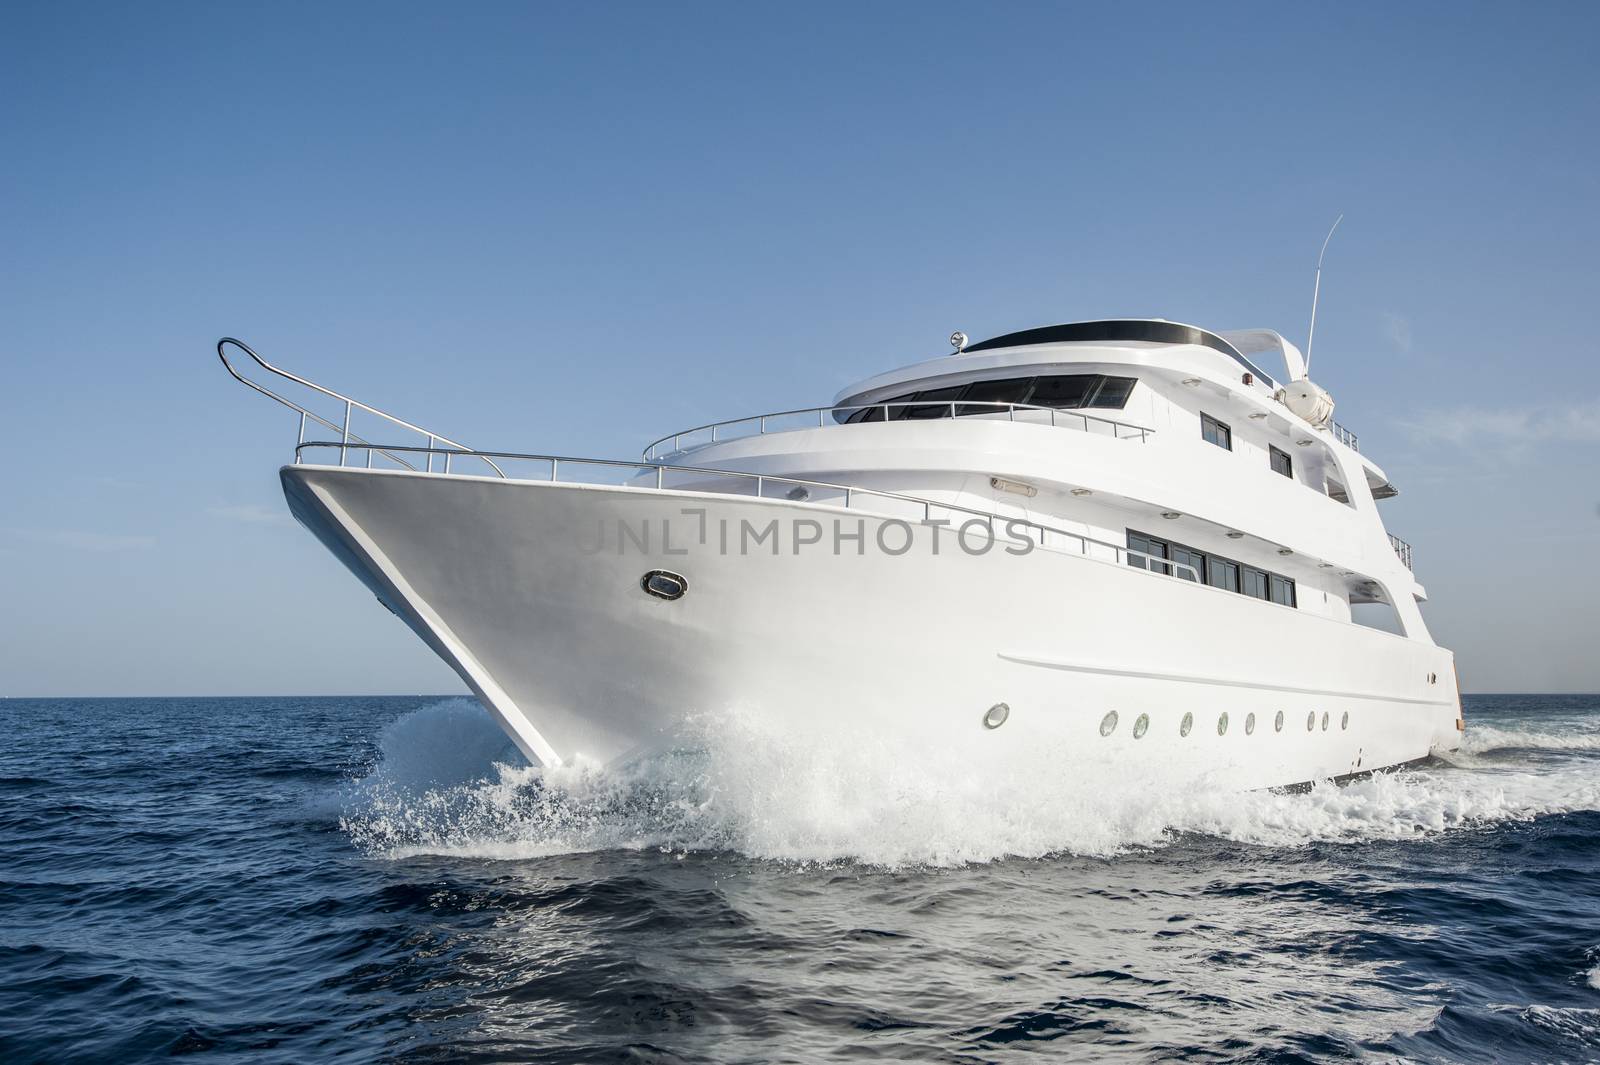 Luxury motor yacht at sea by paulvinten